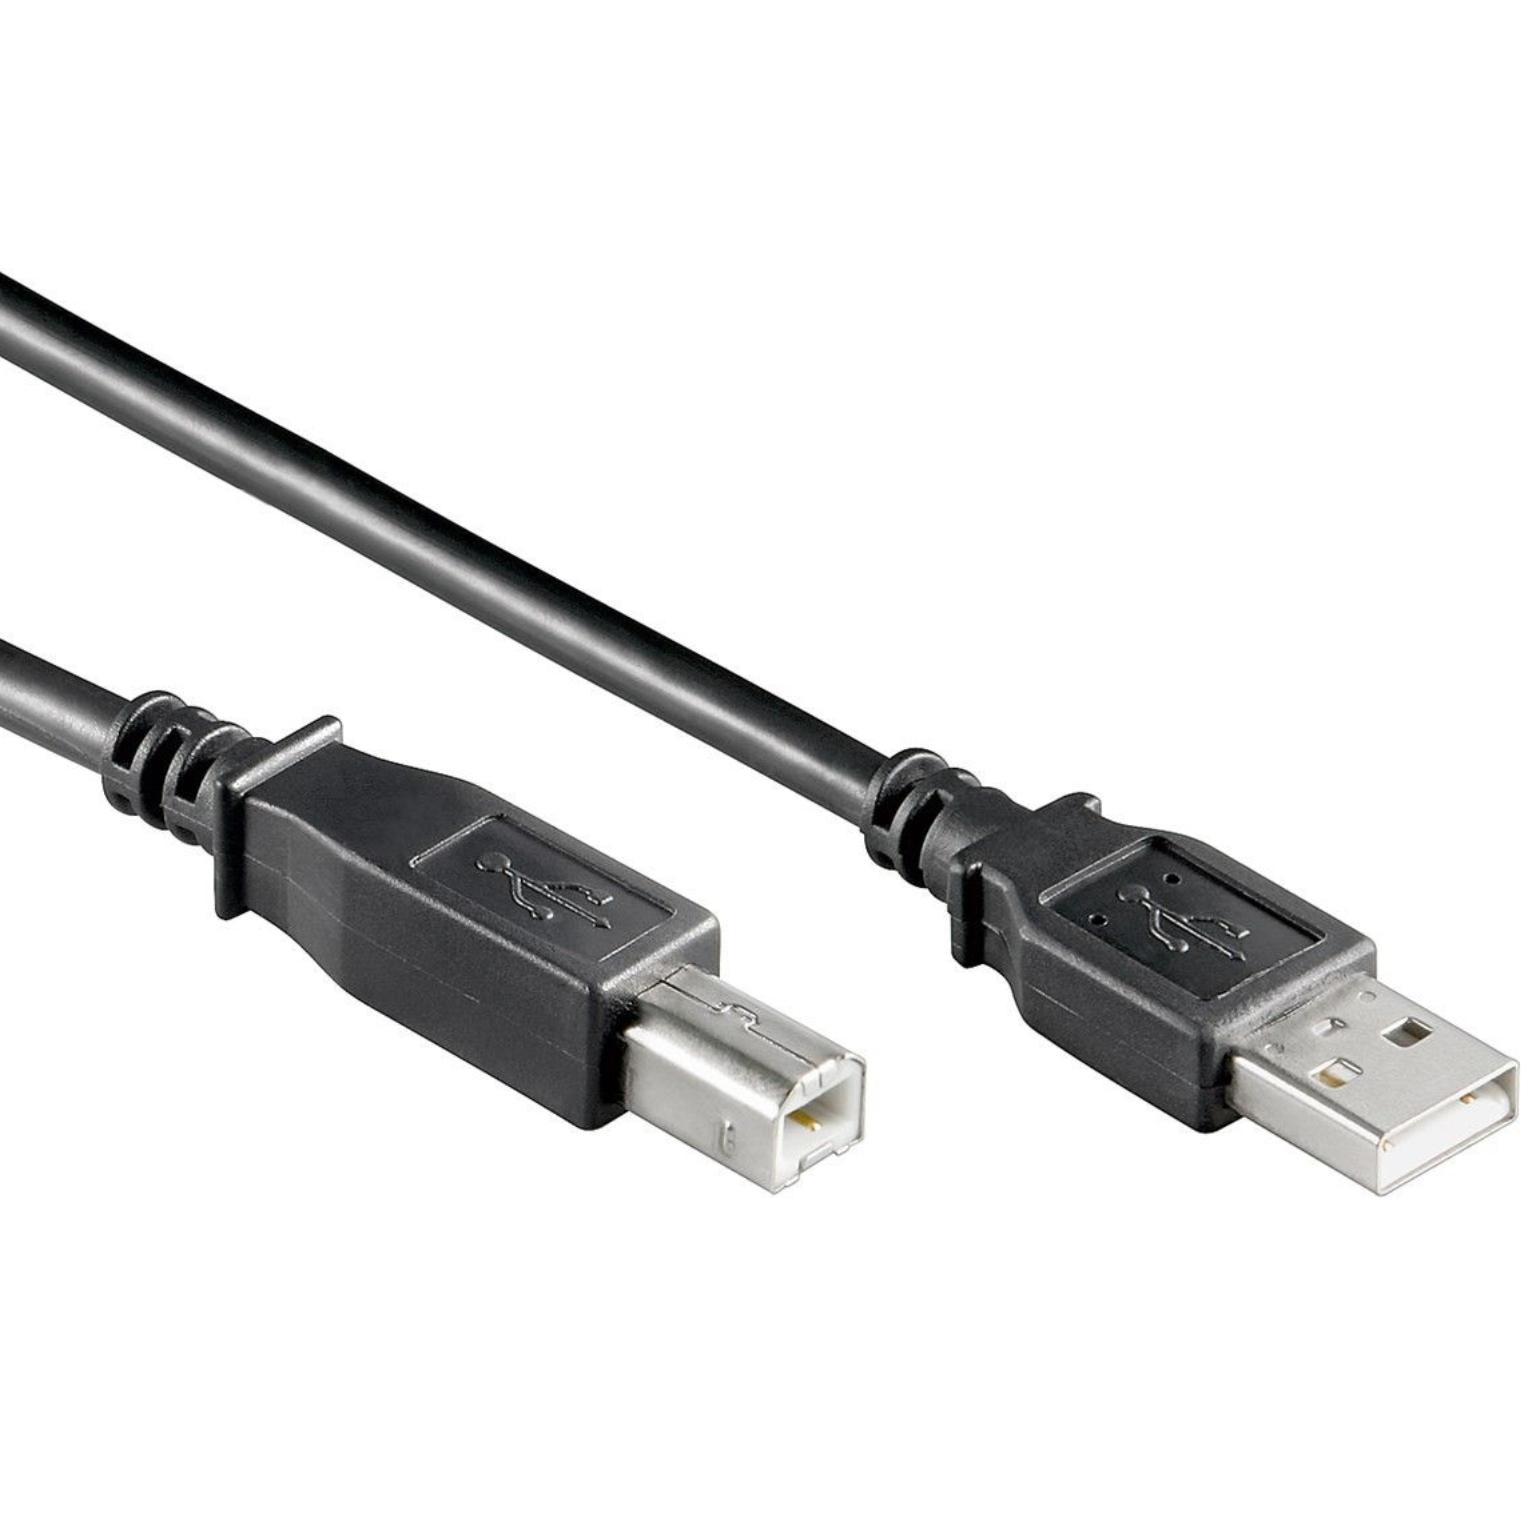 USB-B datakabel - 2 meter - Allteq